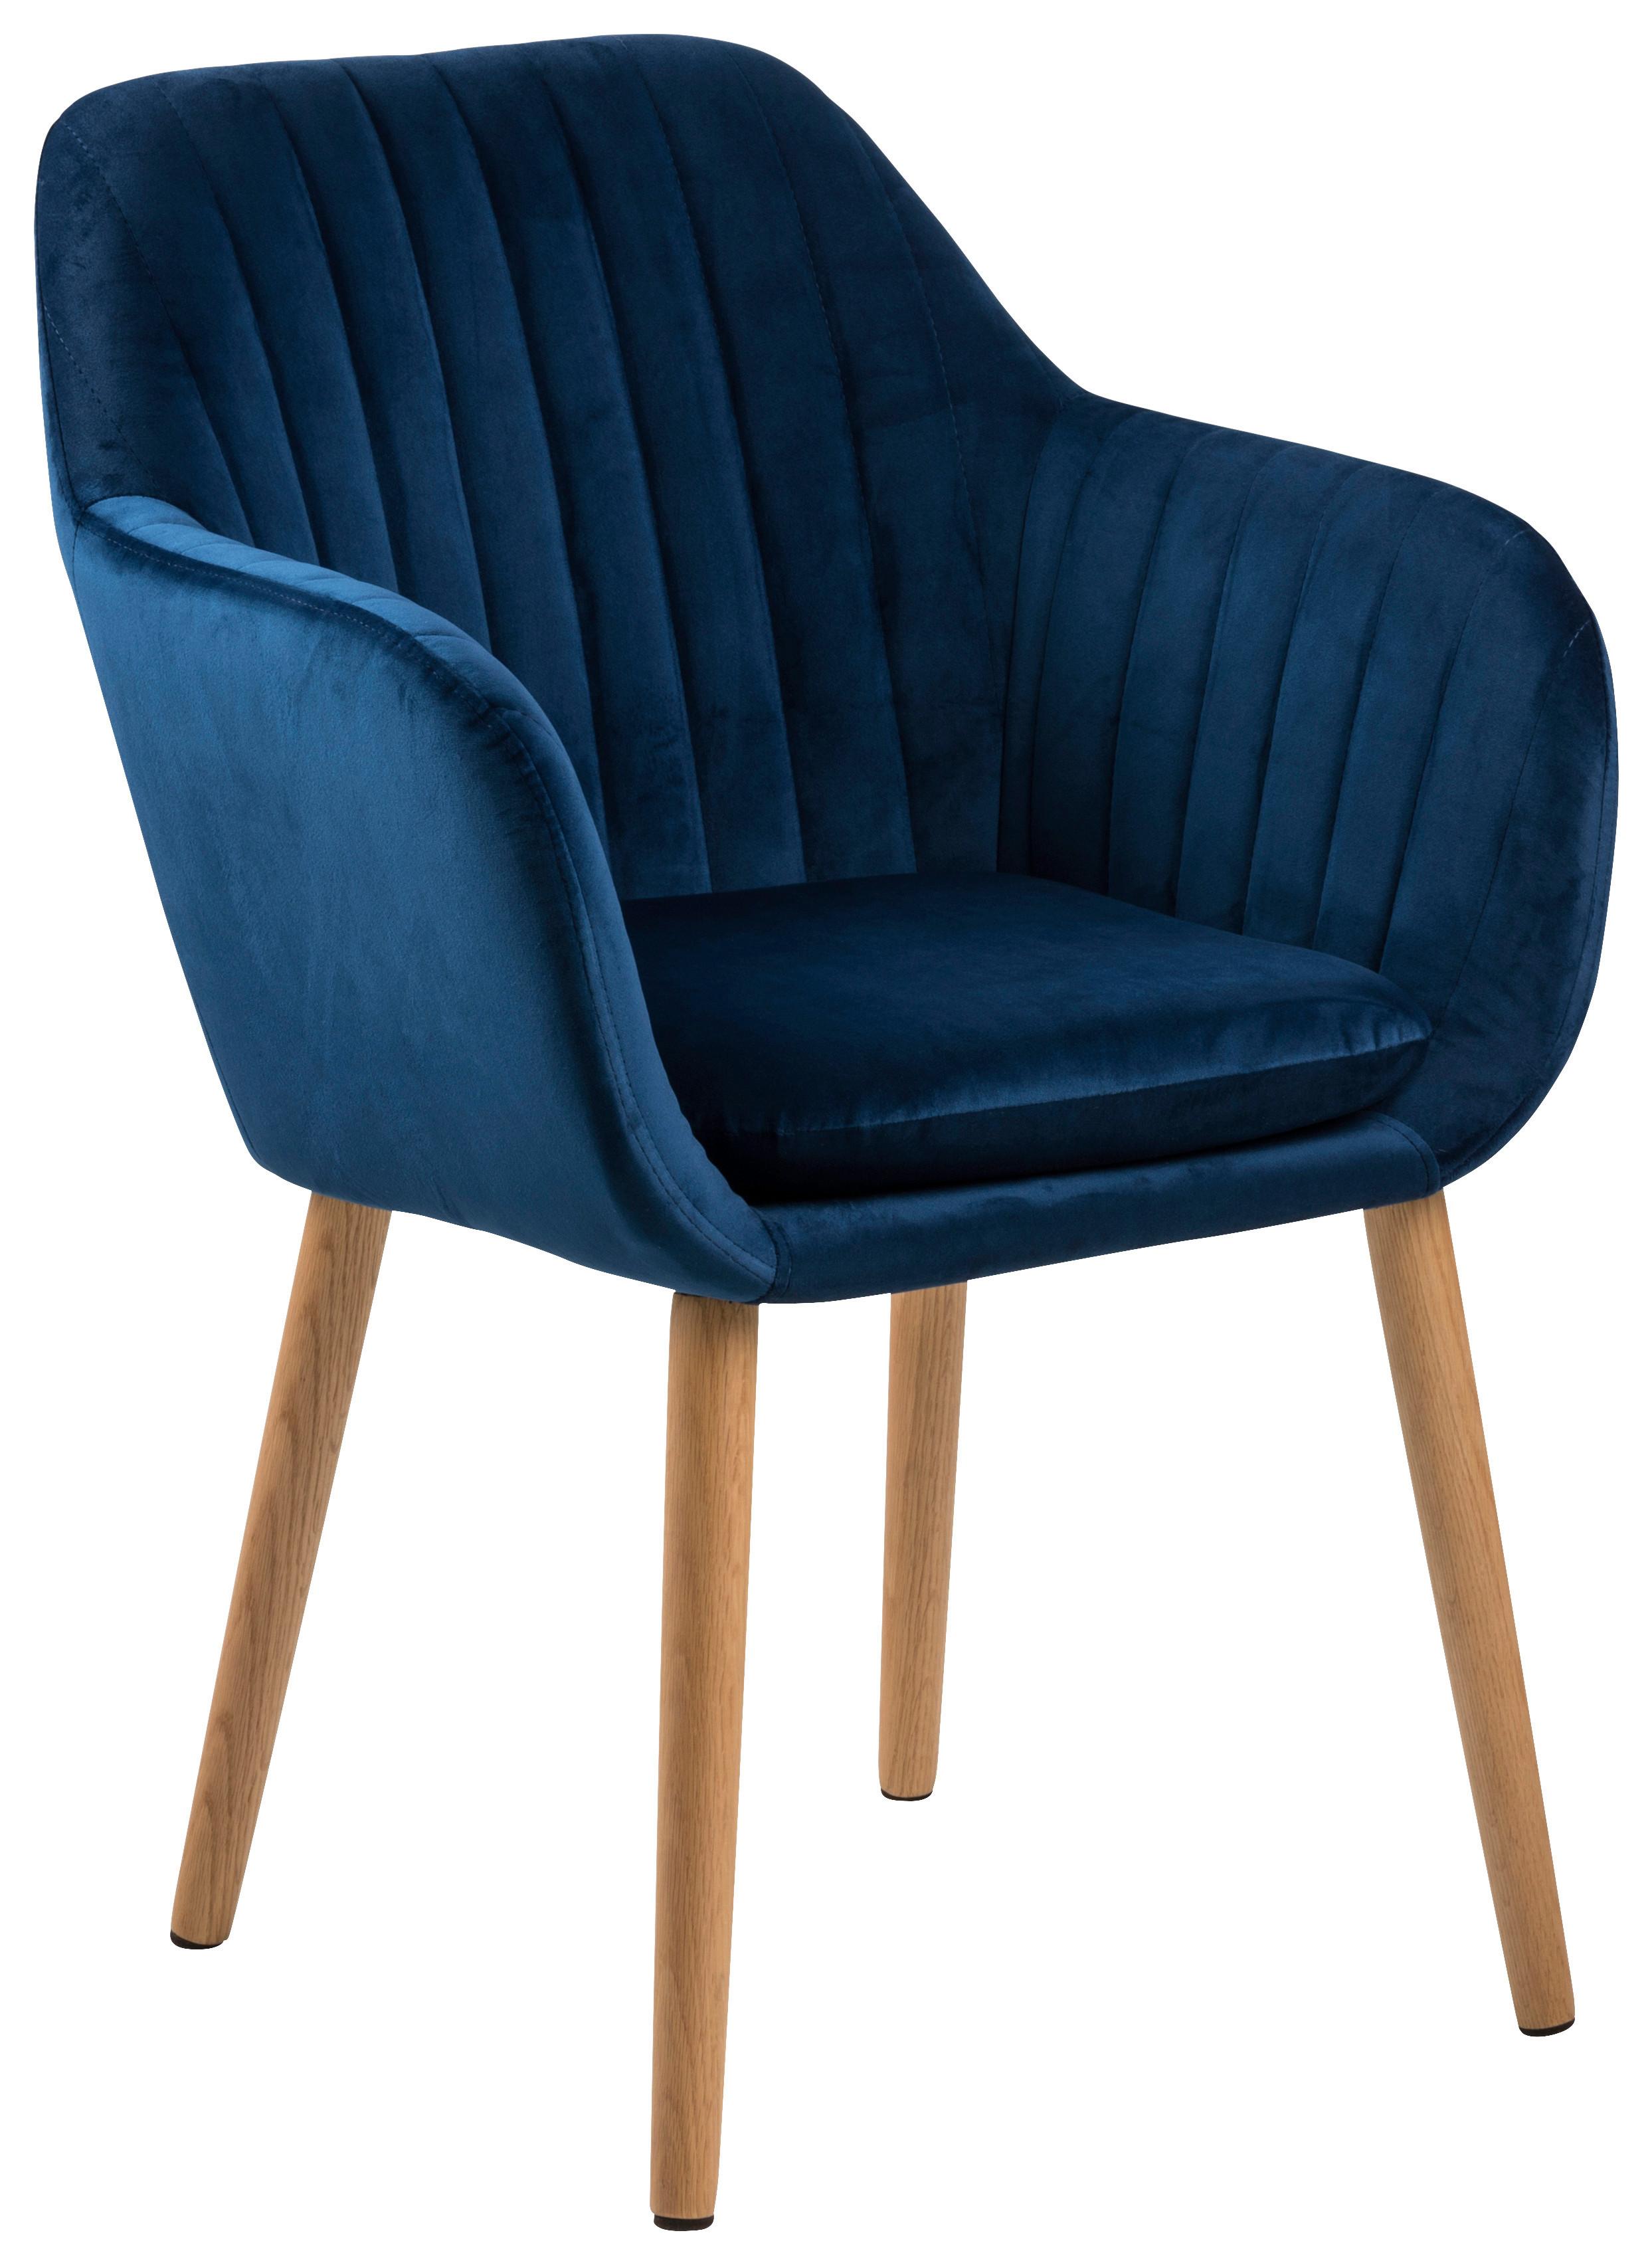 Židle S Područkami Emilia - tmavě modrá, Design, dřevo/textil (57/83/59cm) - Carryhome